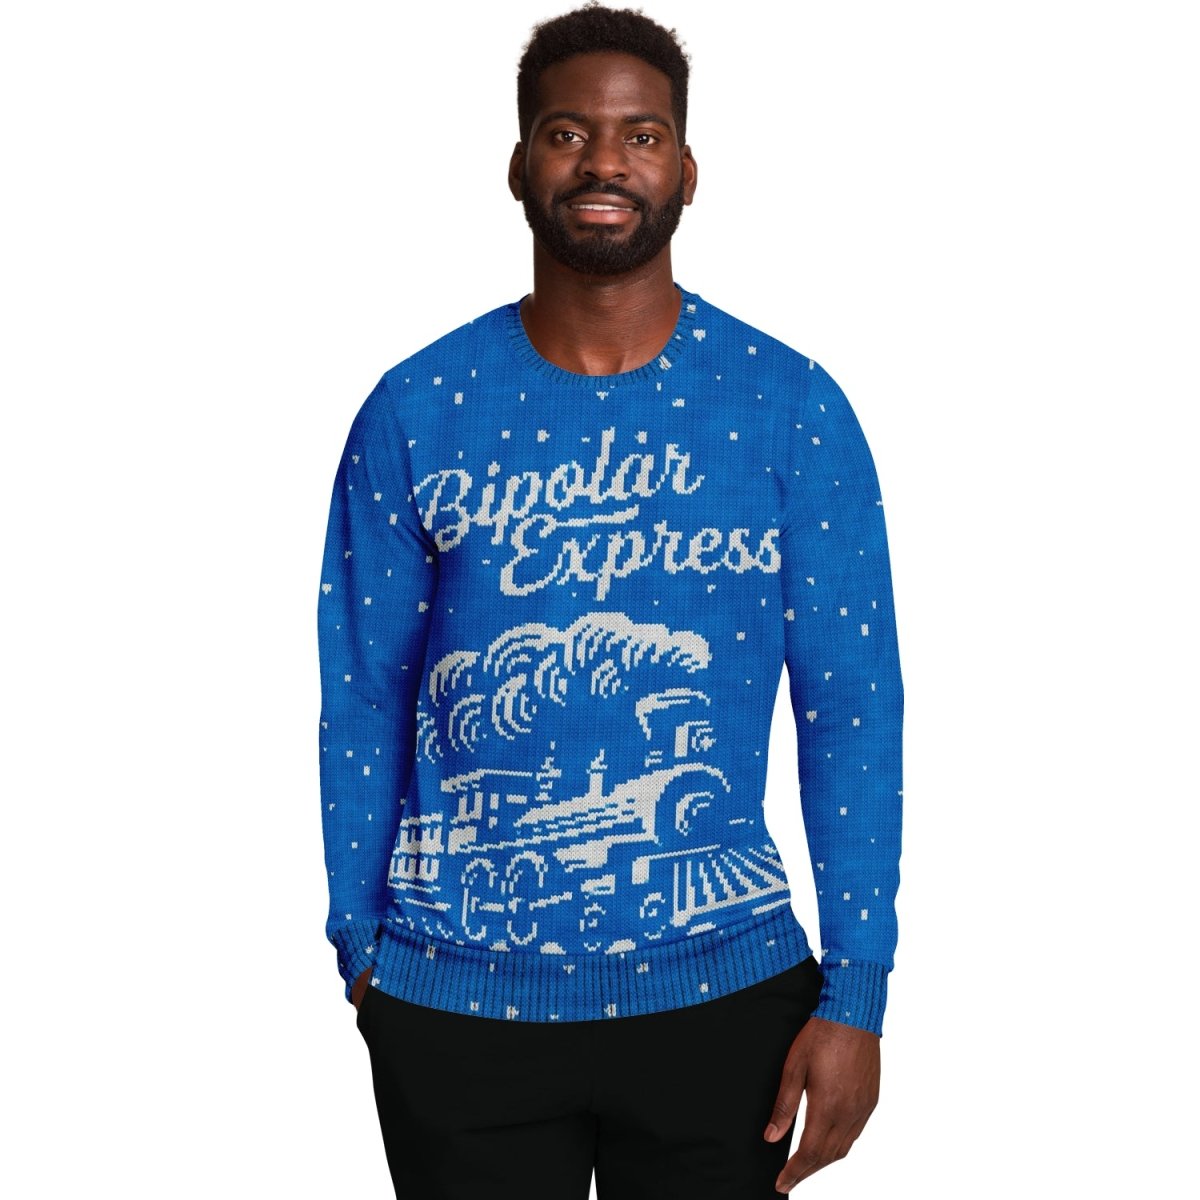 Weihnachtspullover - "Bipolar Express" - Gift of Giving DE